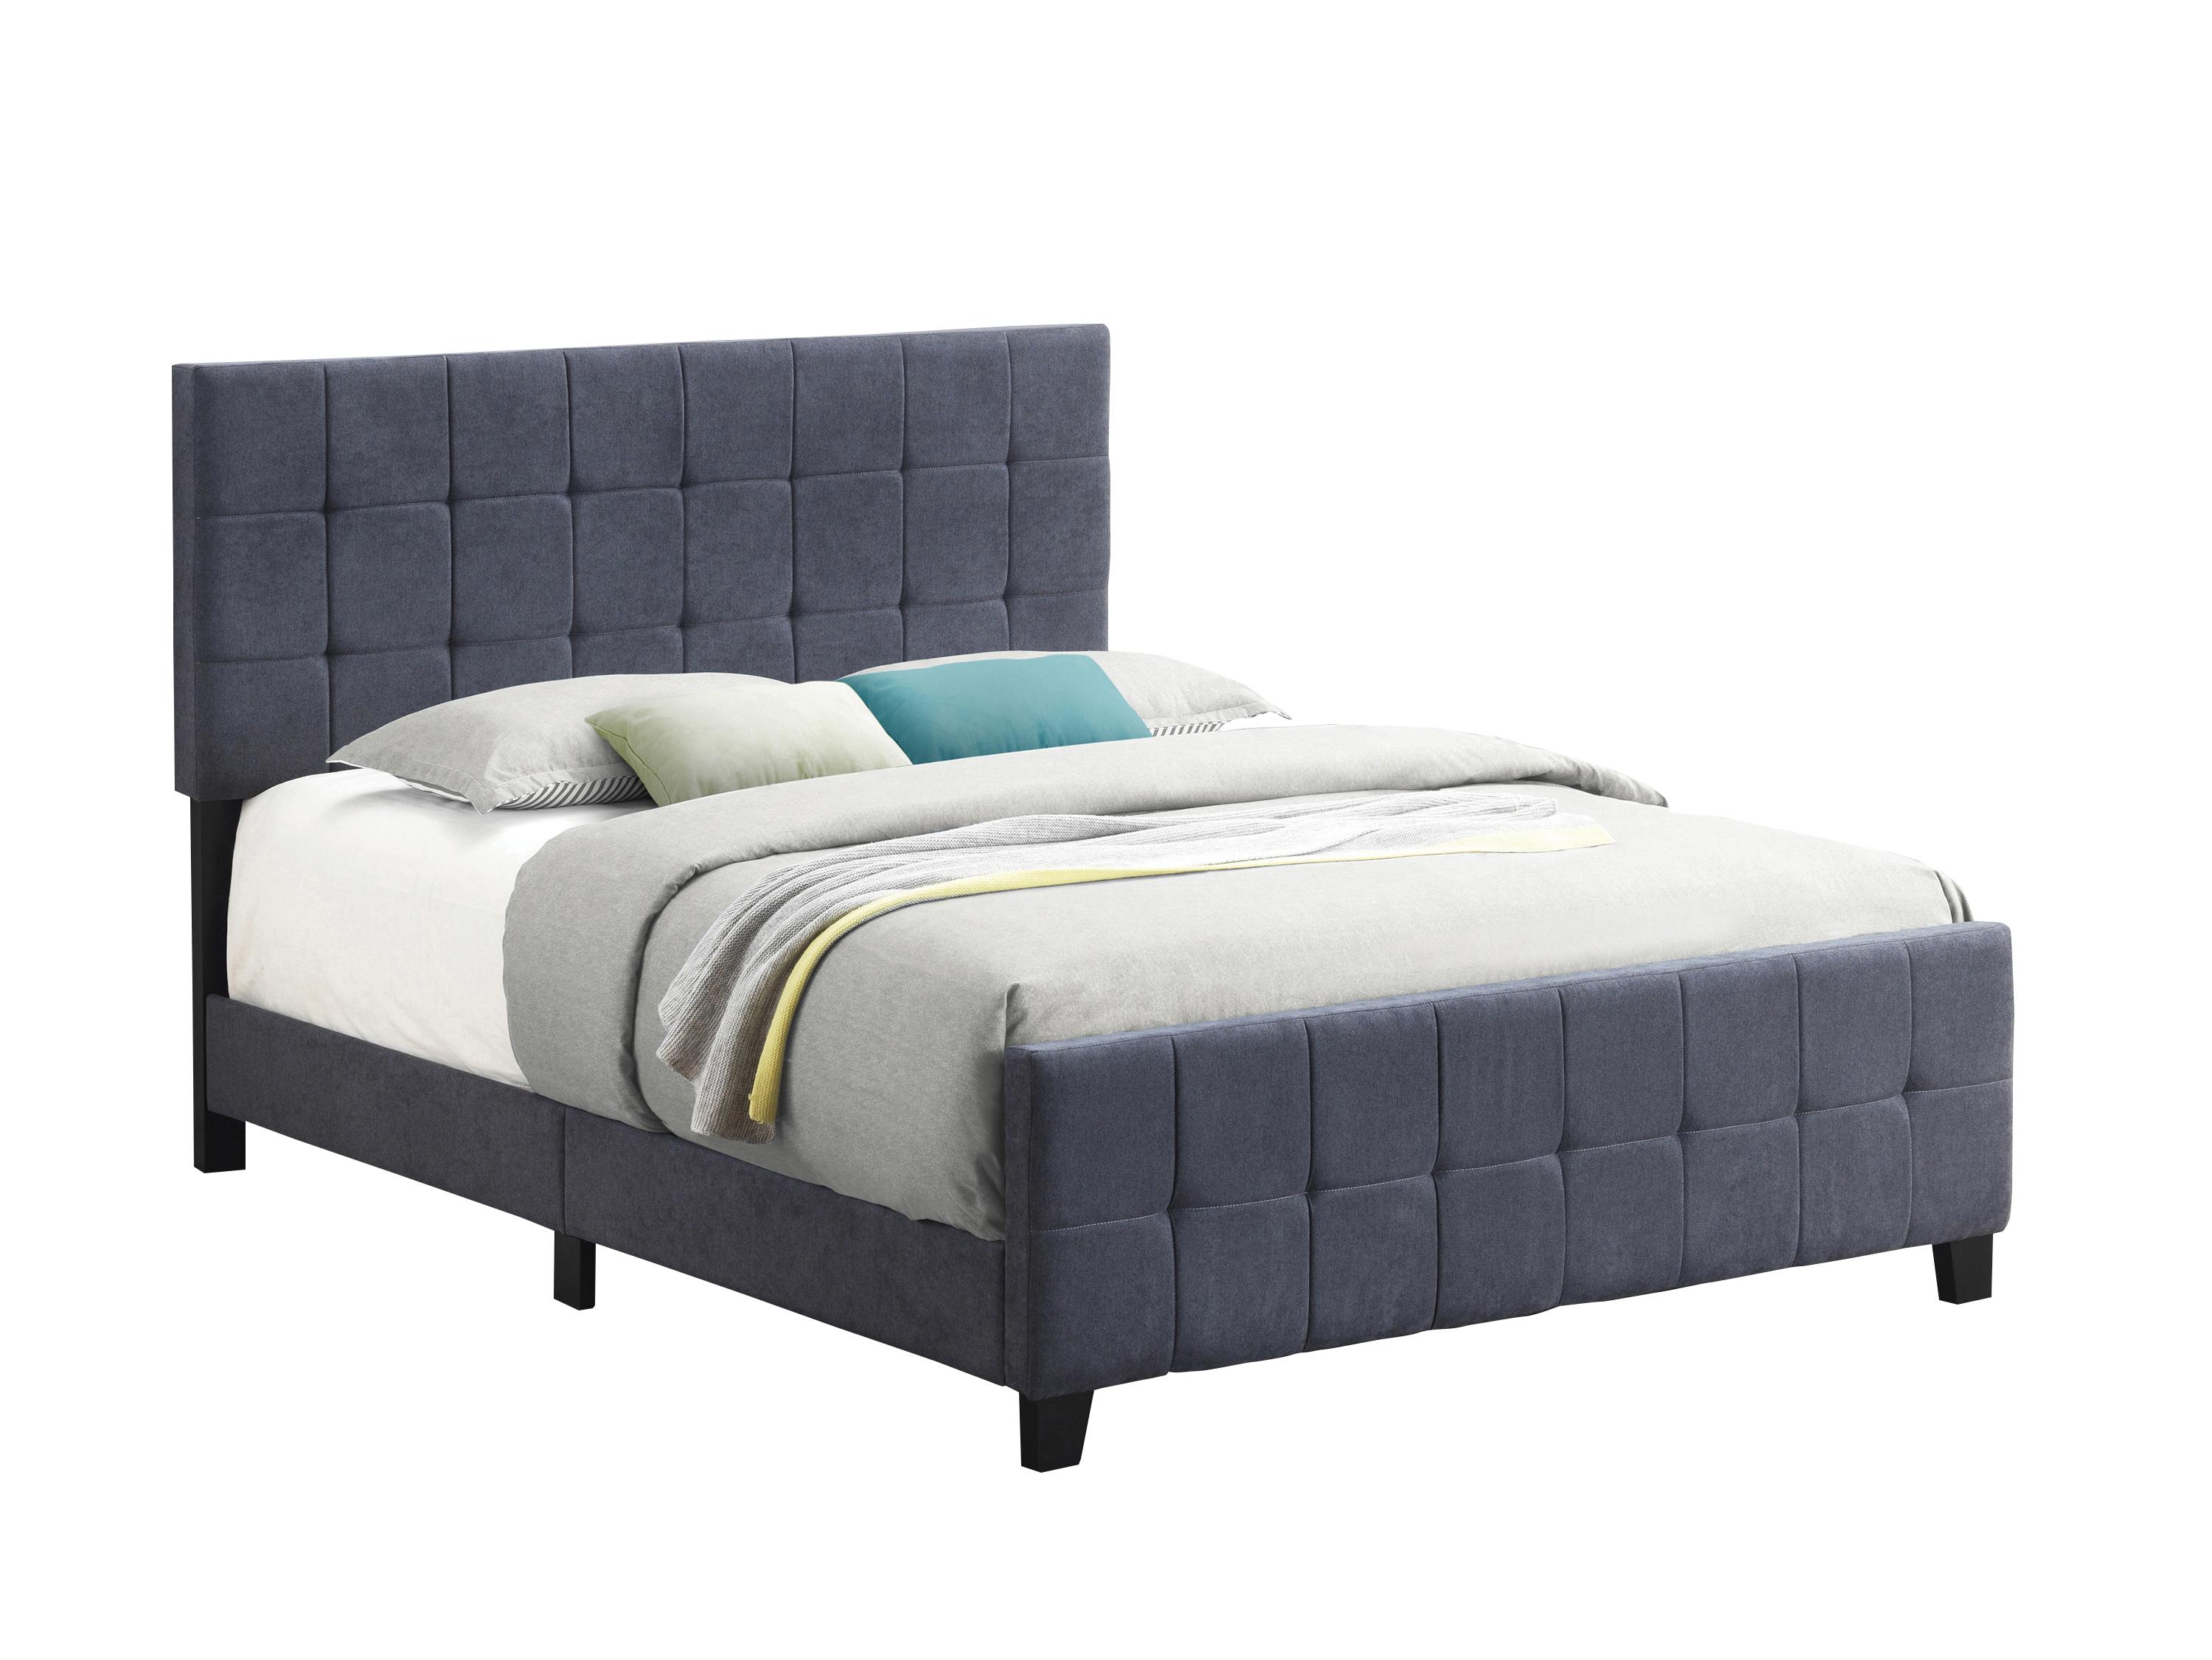 Contemporary Bed 305953KE Fairfield 305953KE in Dark Gray Fabric